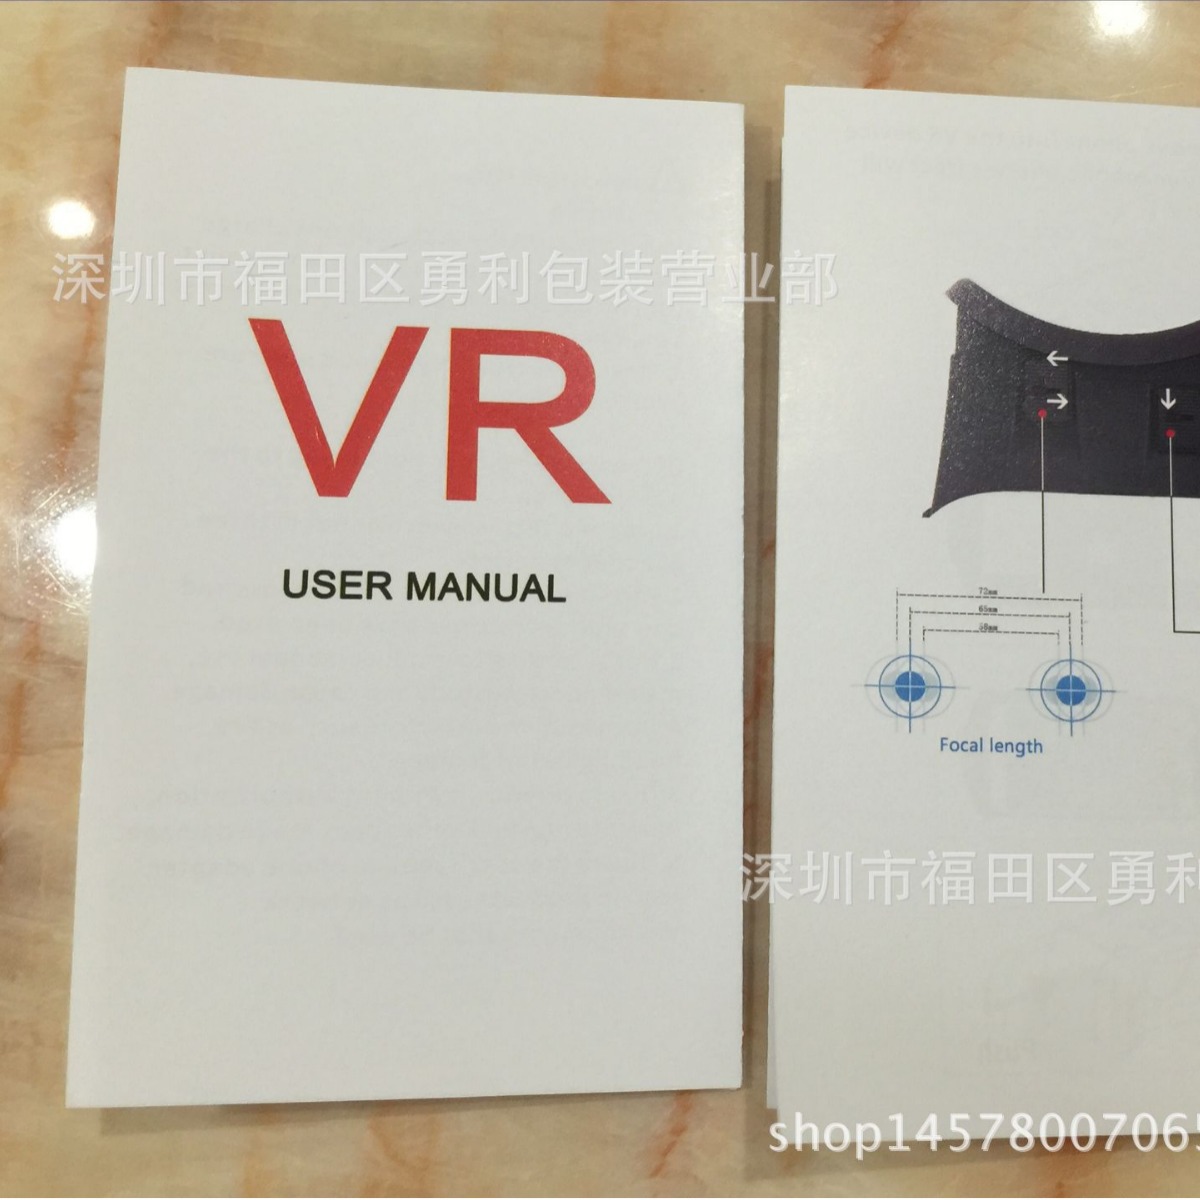 VRBOX手机说明书3D眼镜虚拟现实头盔头戴式Oculus Ri 说明书现货